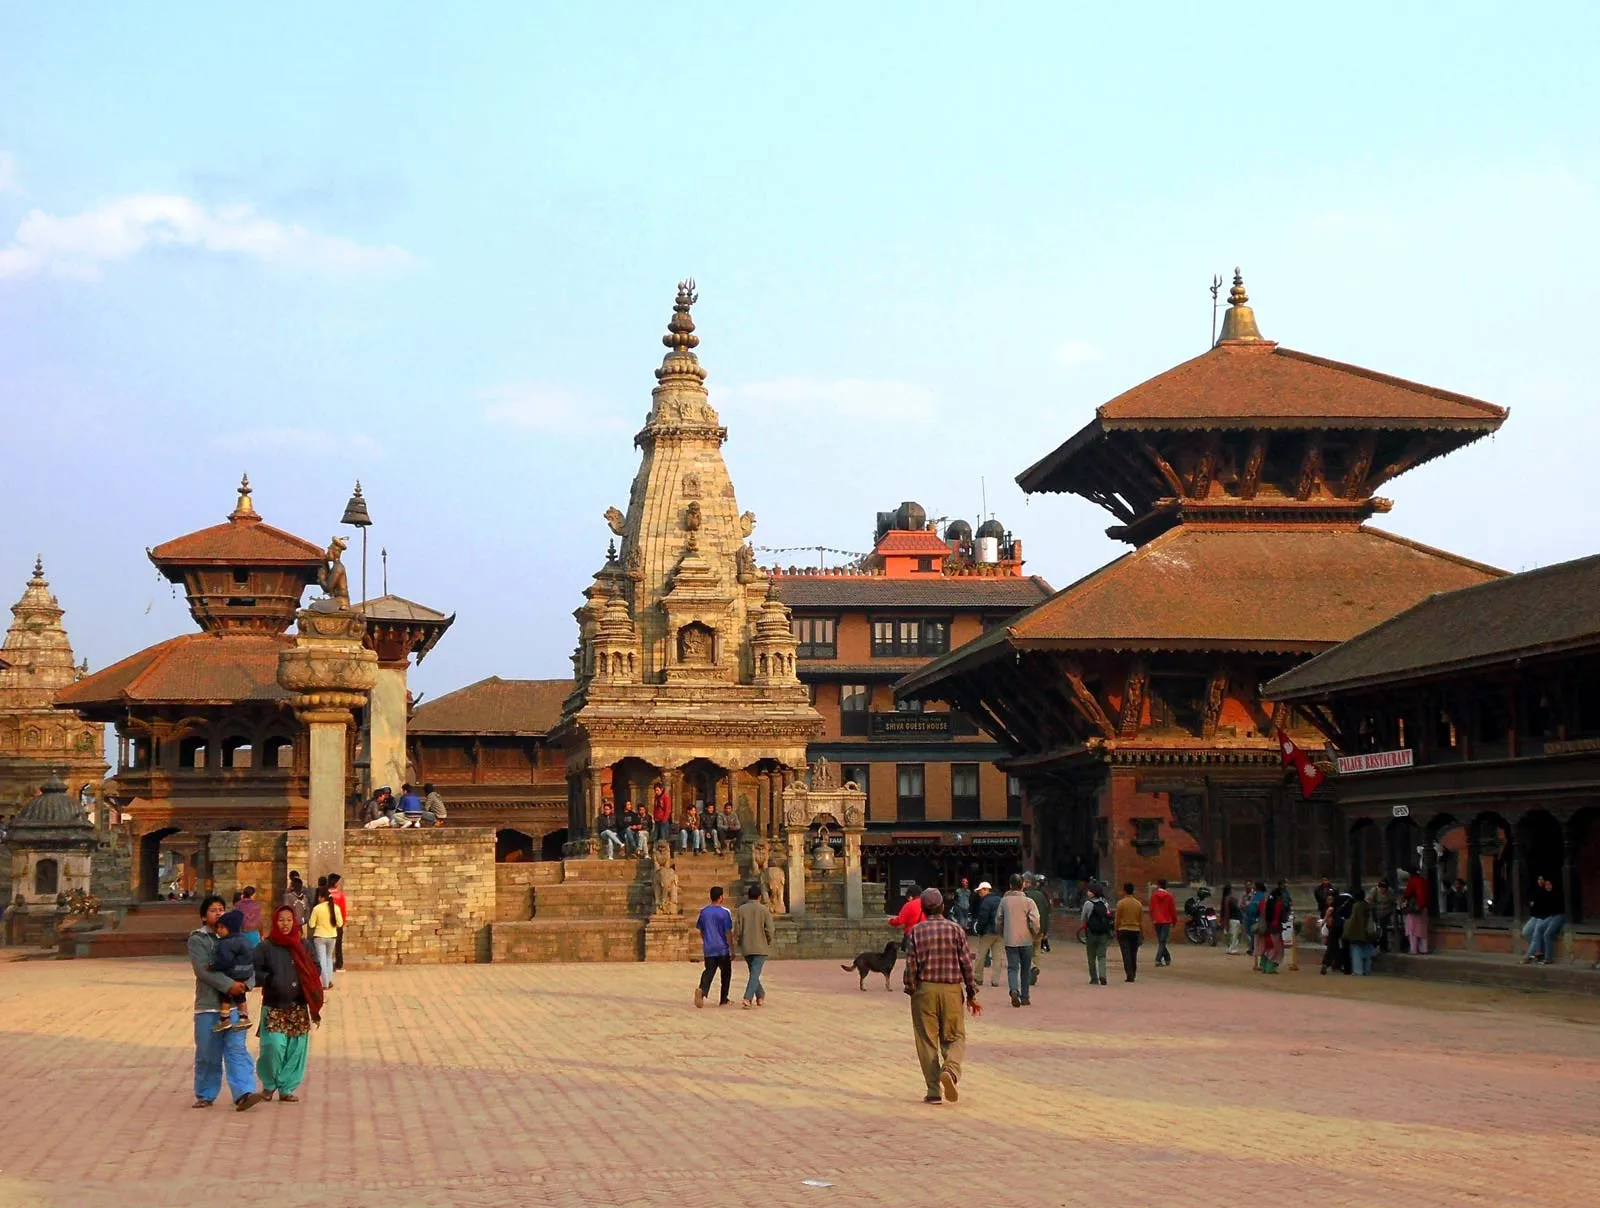 Darkha Gaun – Darkha Phedi - Dhading Besi – Kathmandu 1310m /4323ft 6 -7 hrs drive'